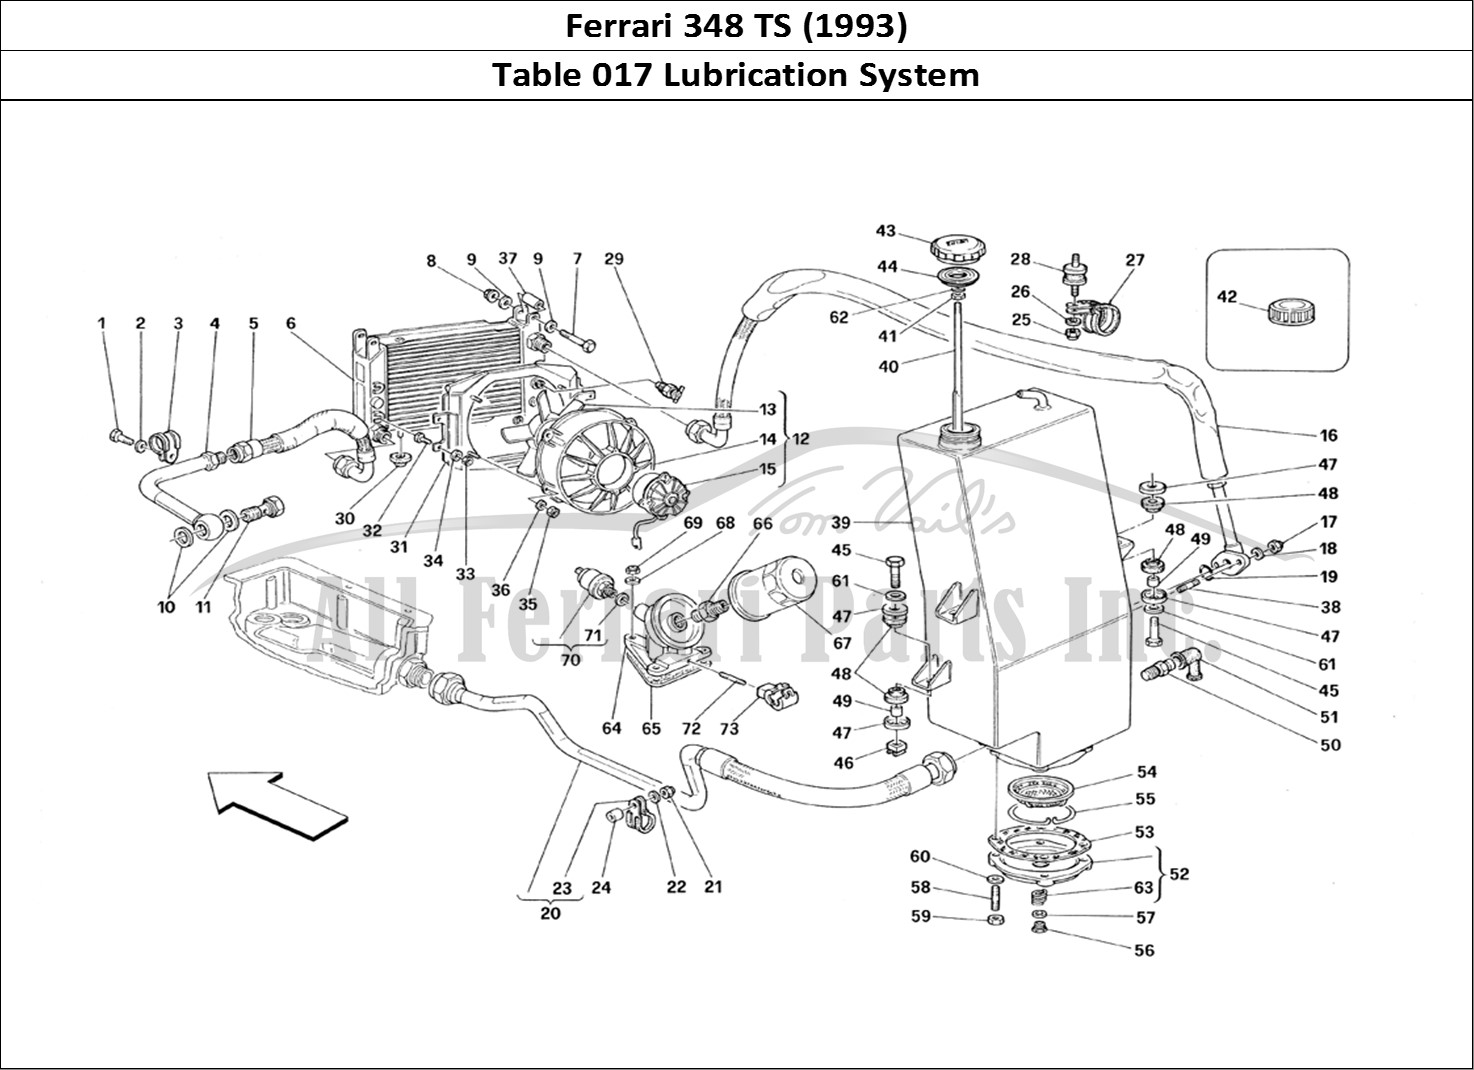 Ferrari Parts Ferrari 348 TB (1993) Page 017 Lubrication System